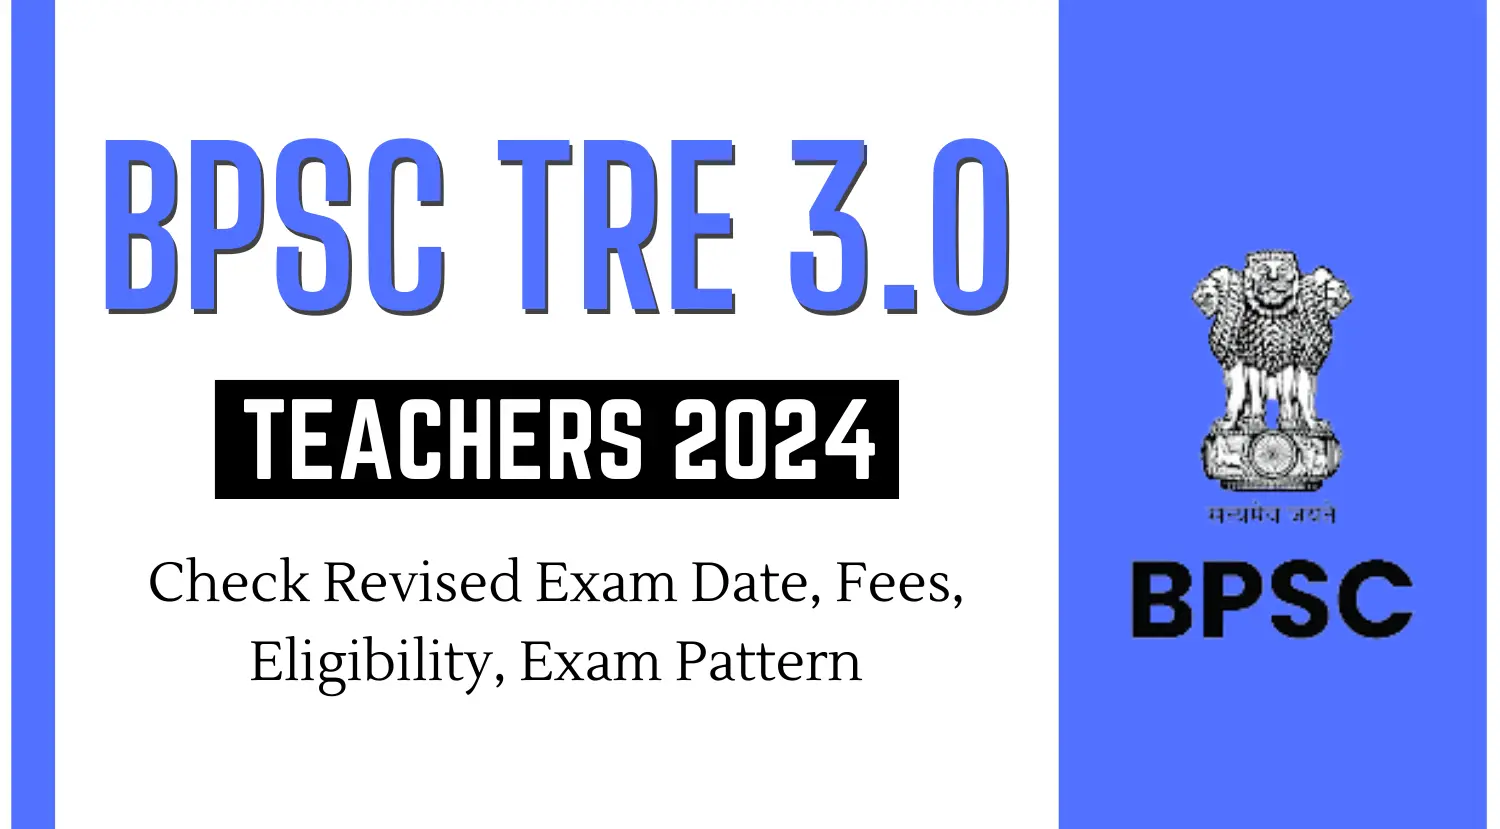 BPSC TRE 30 Teachers 2024 Exam Date Fees Eligibility Exam Pattern